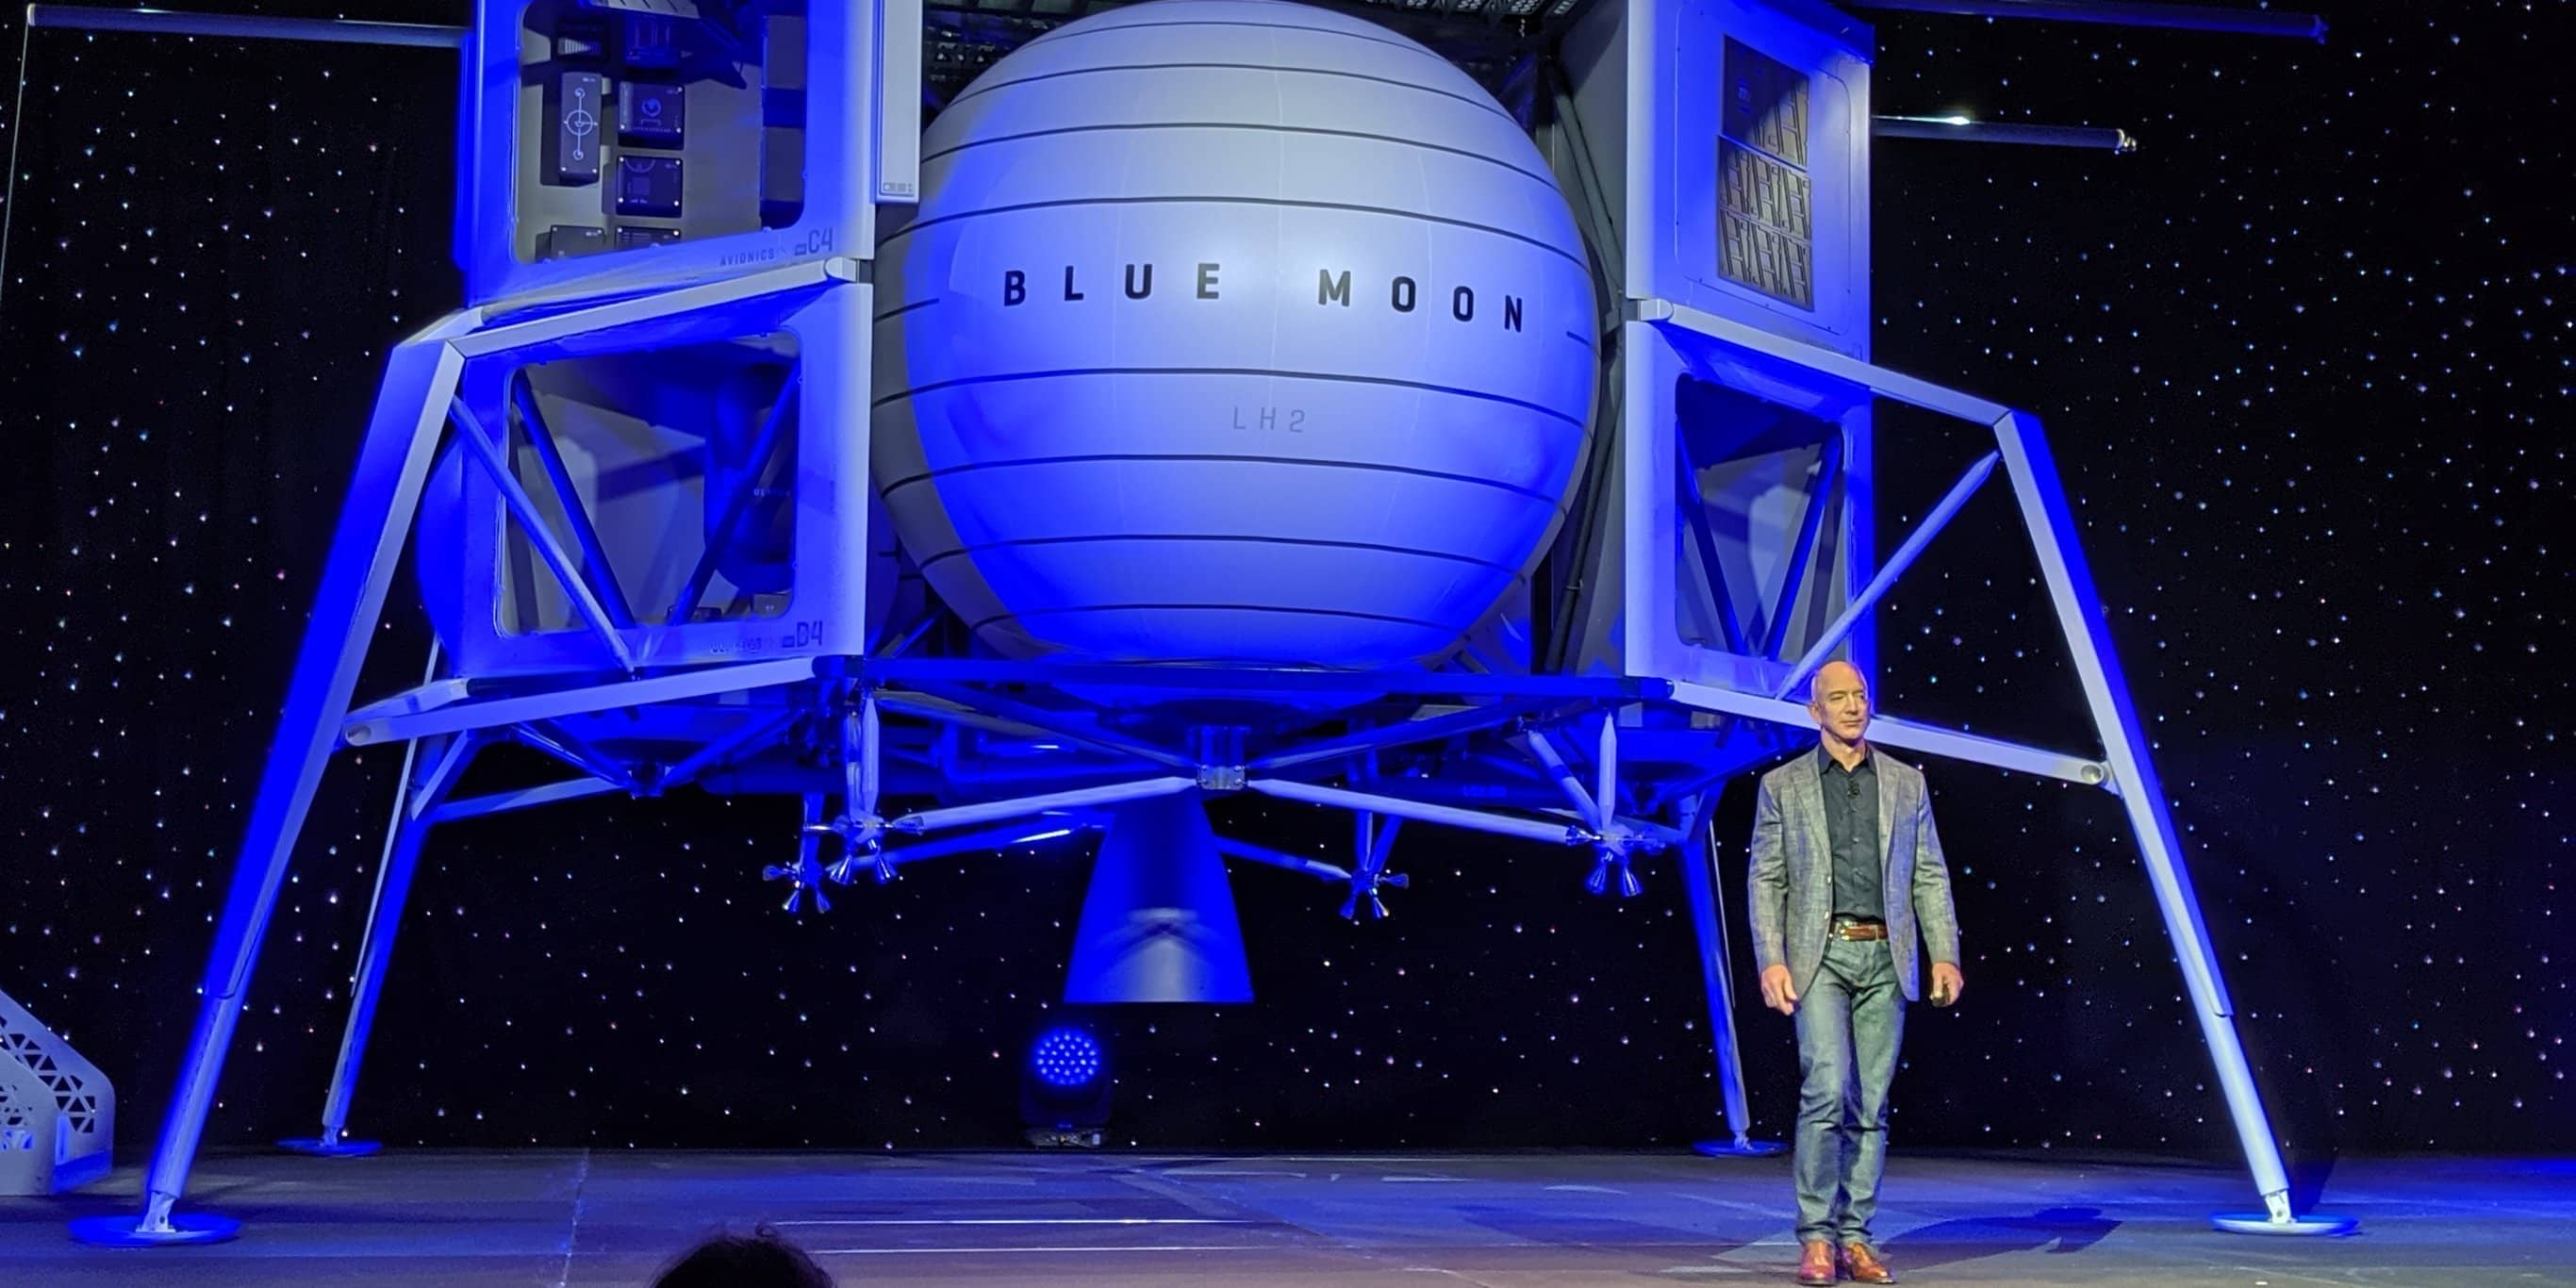 Jeff Bezos Has Unveiled Blue Moon, The New Lunar Lander!